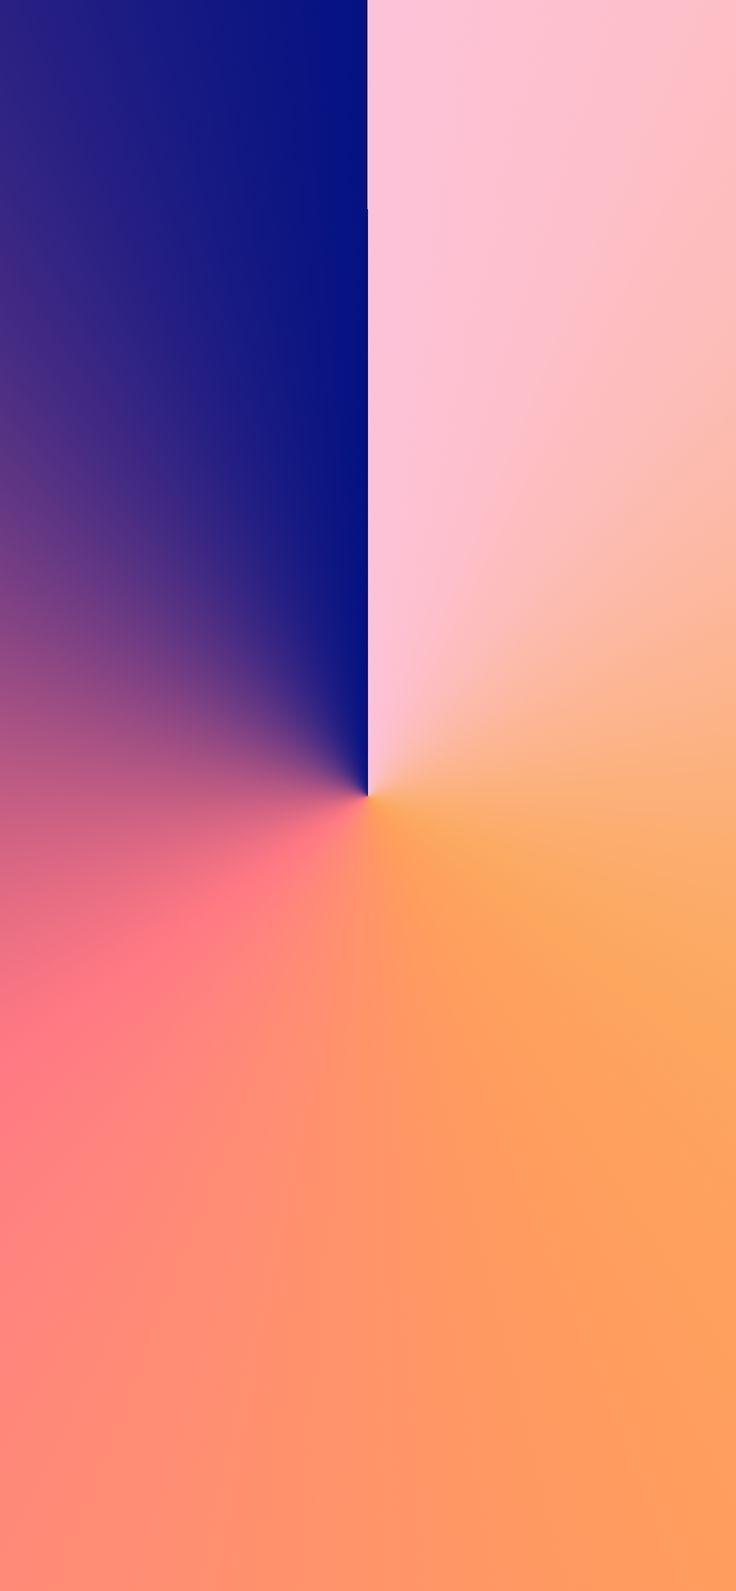 Split Colors iPhone Pro Max Wallpaper Color